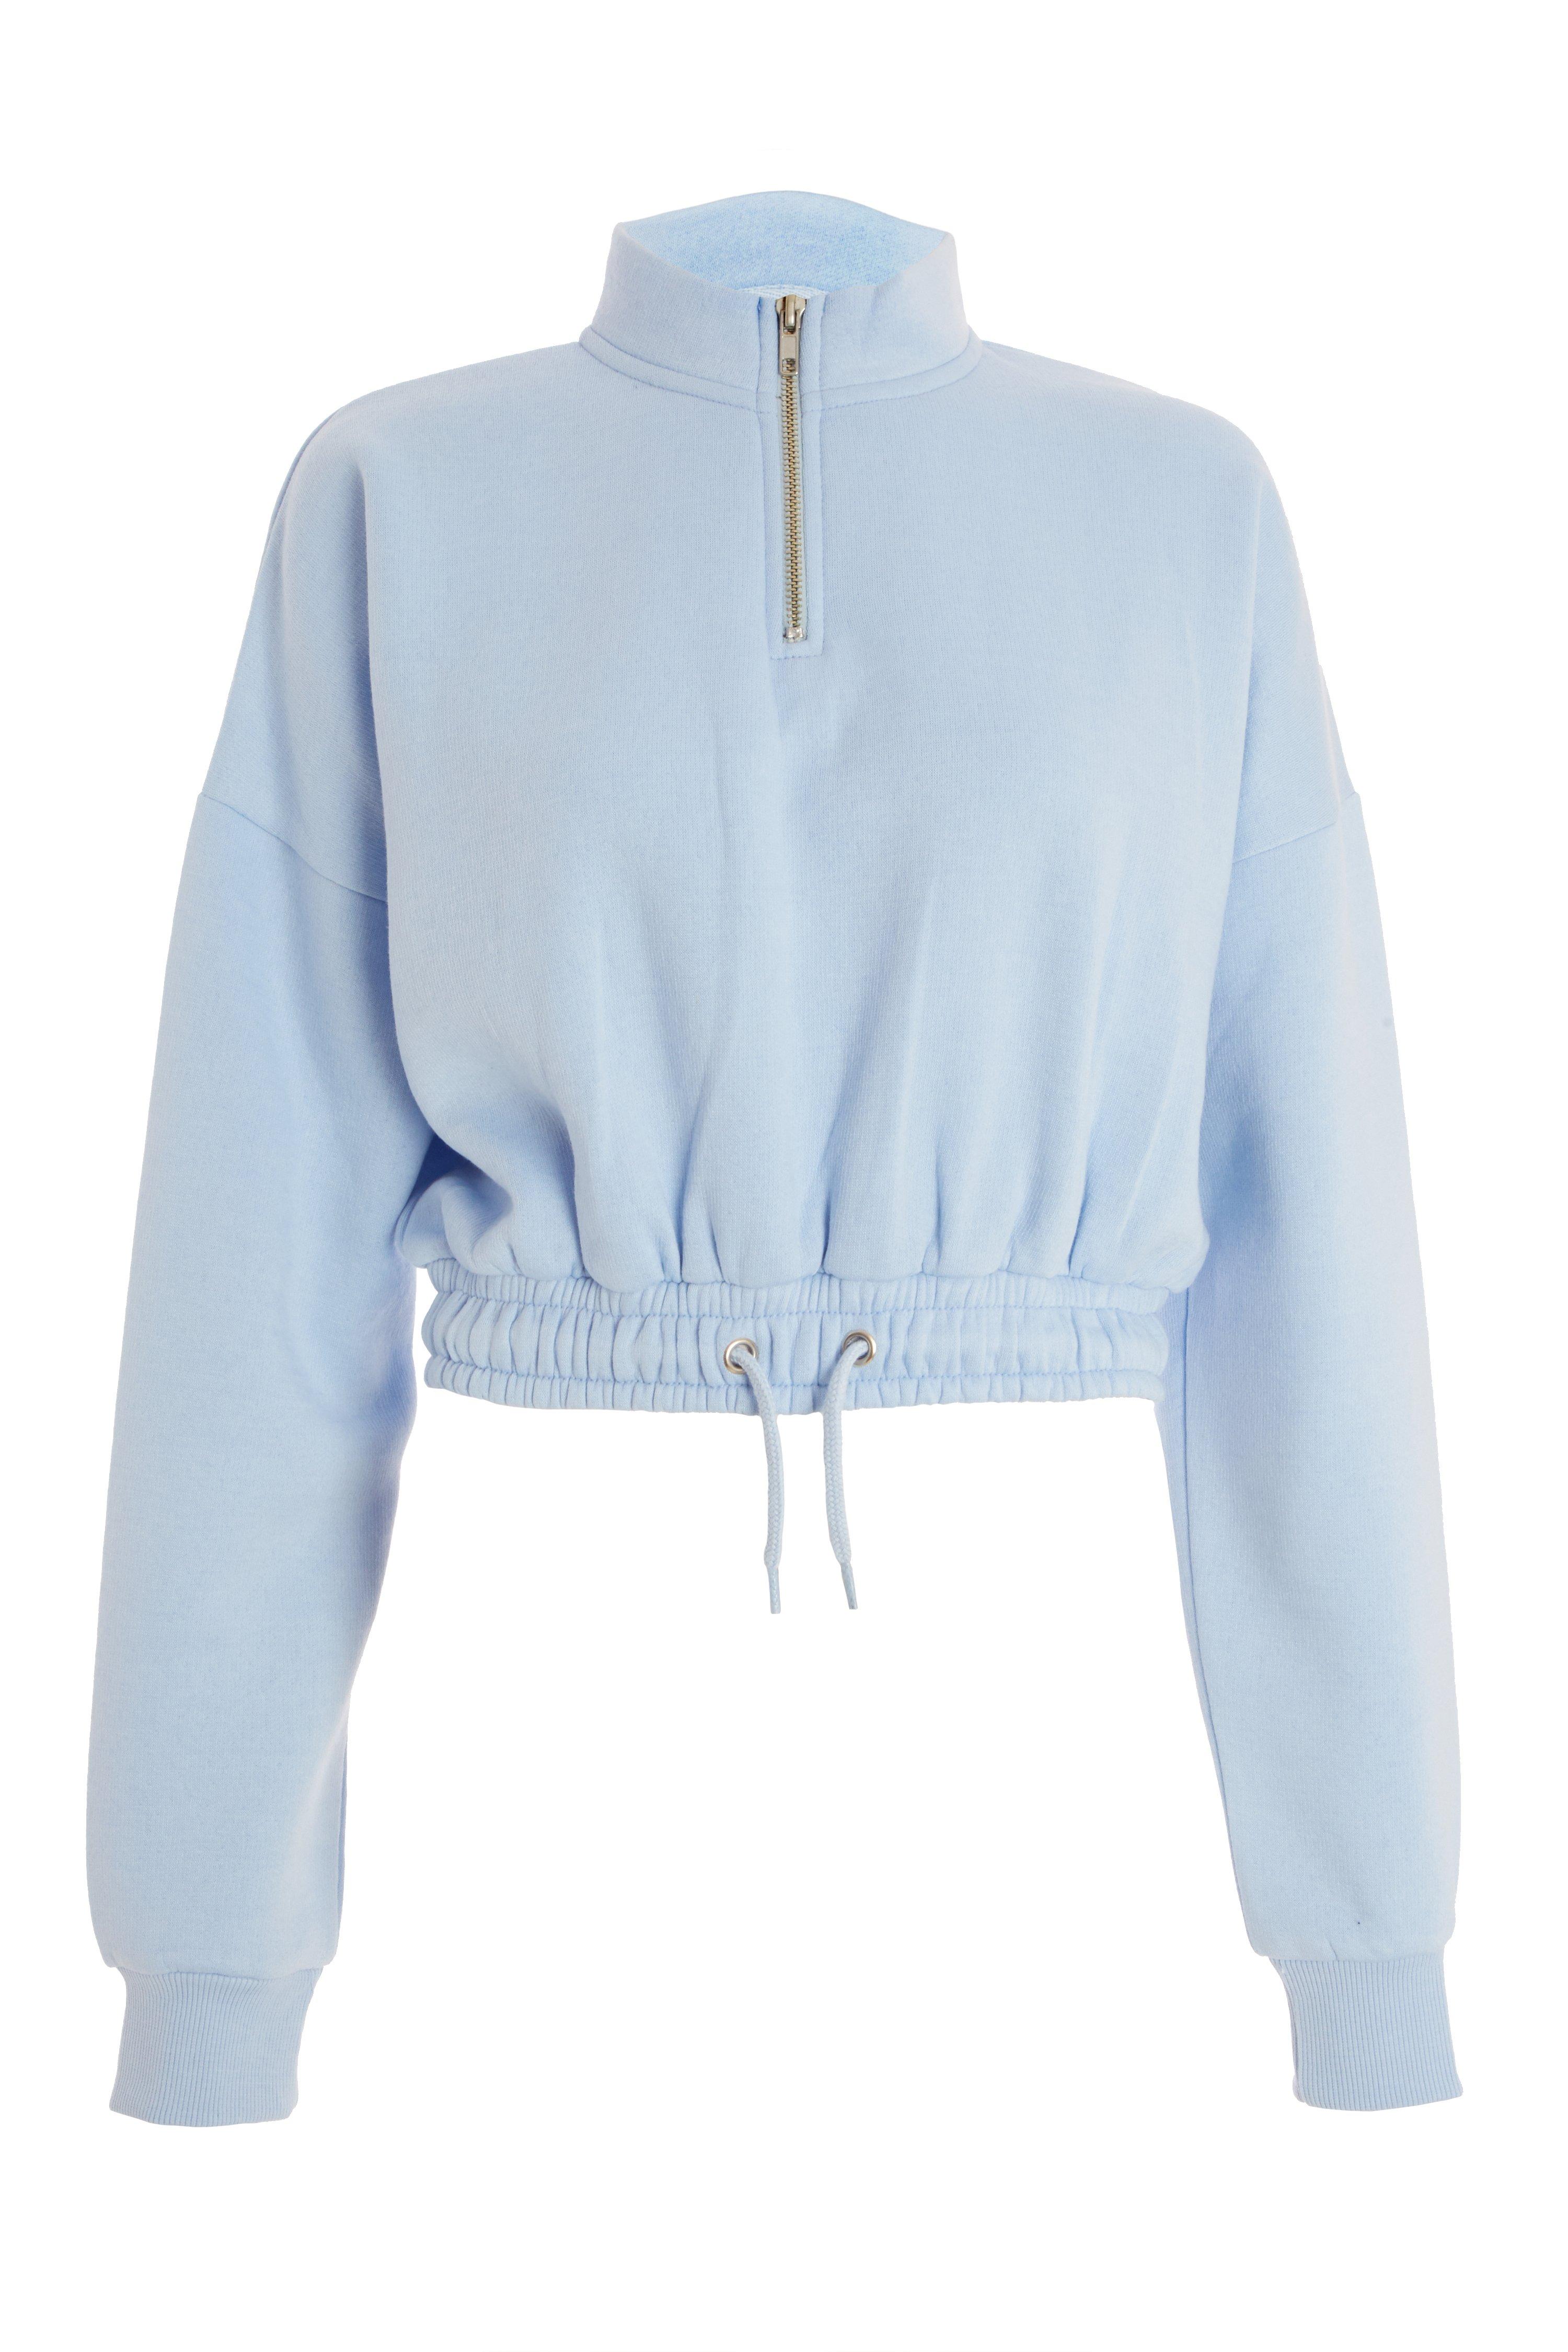 Blue Zip Cropped Sweatshirt - Quiz Clothing